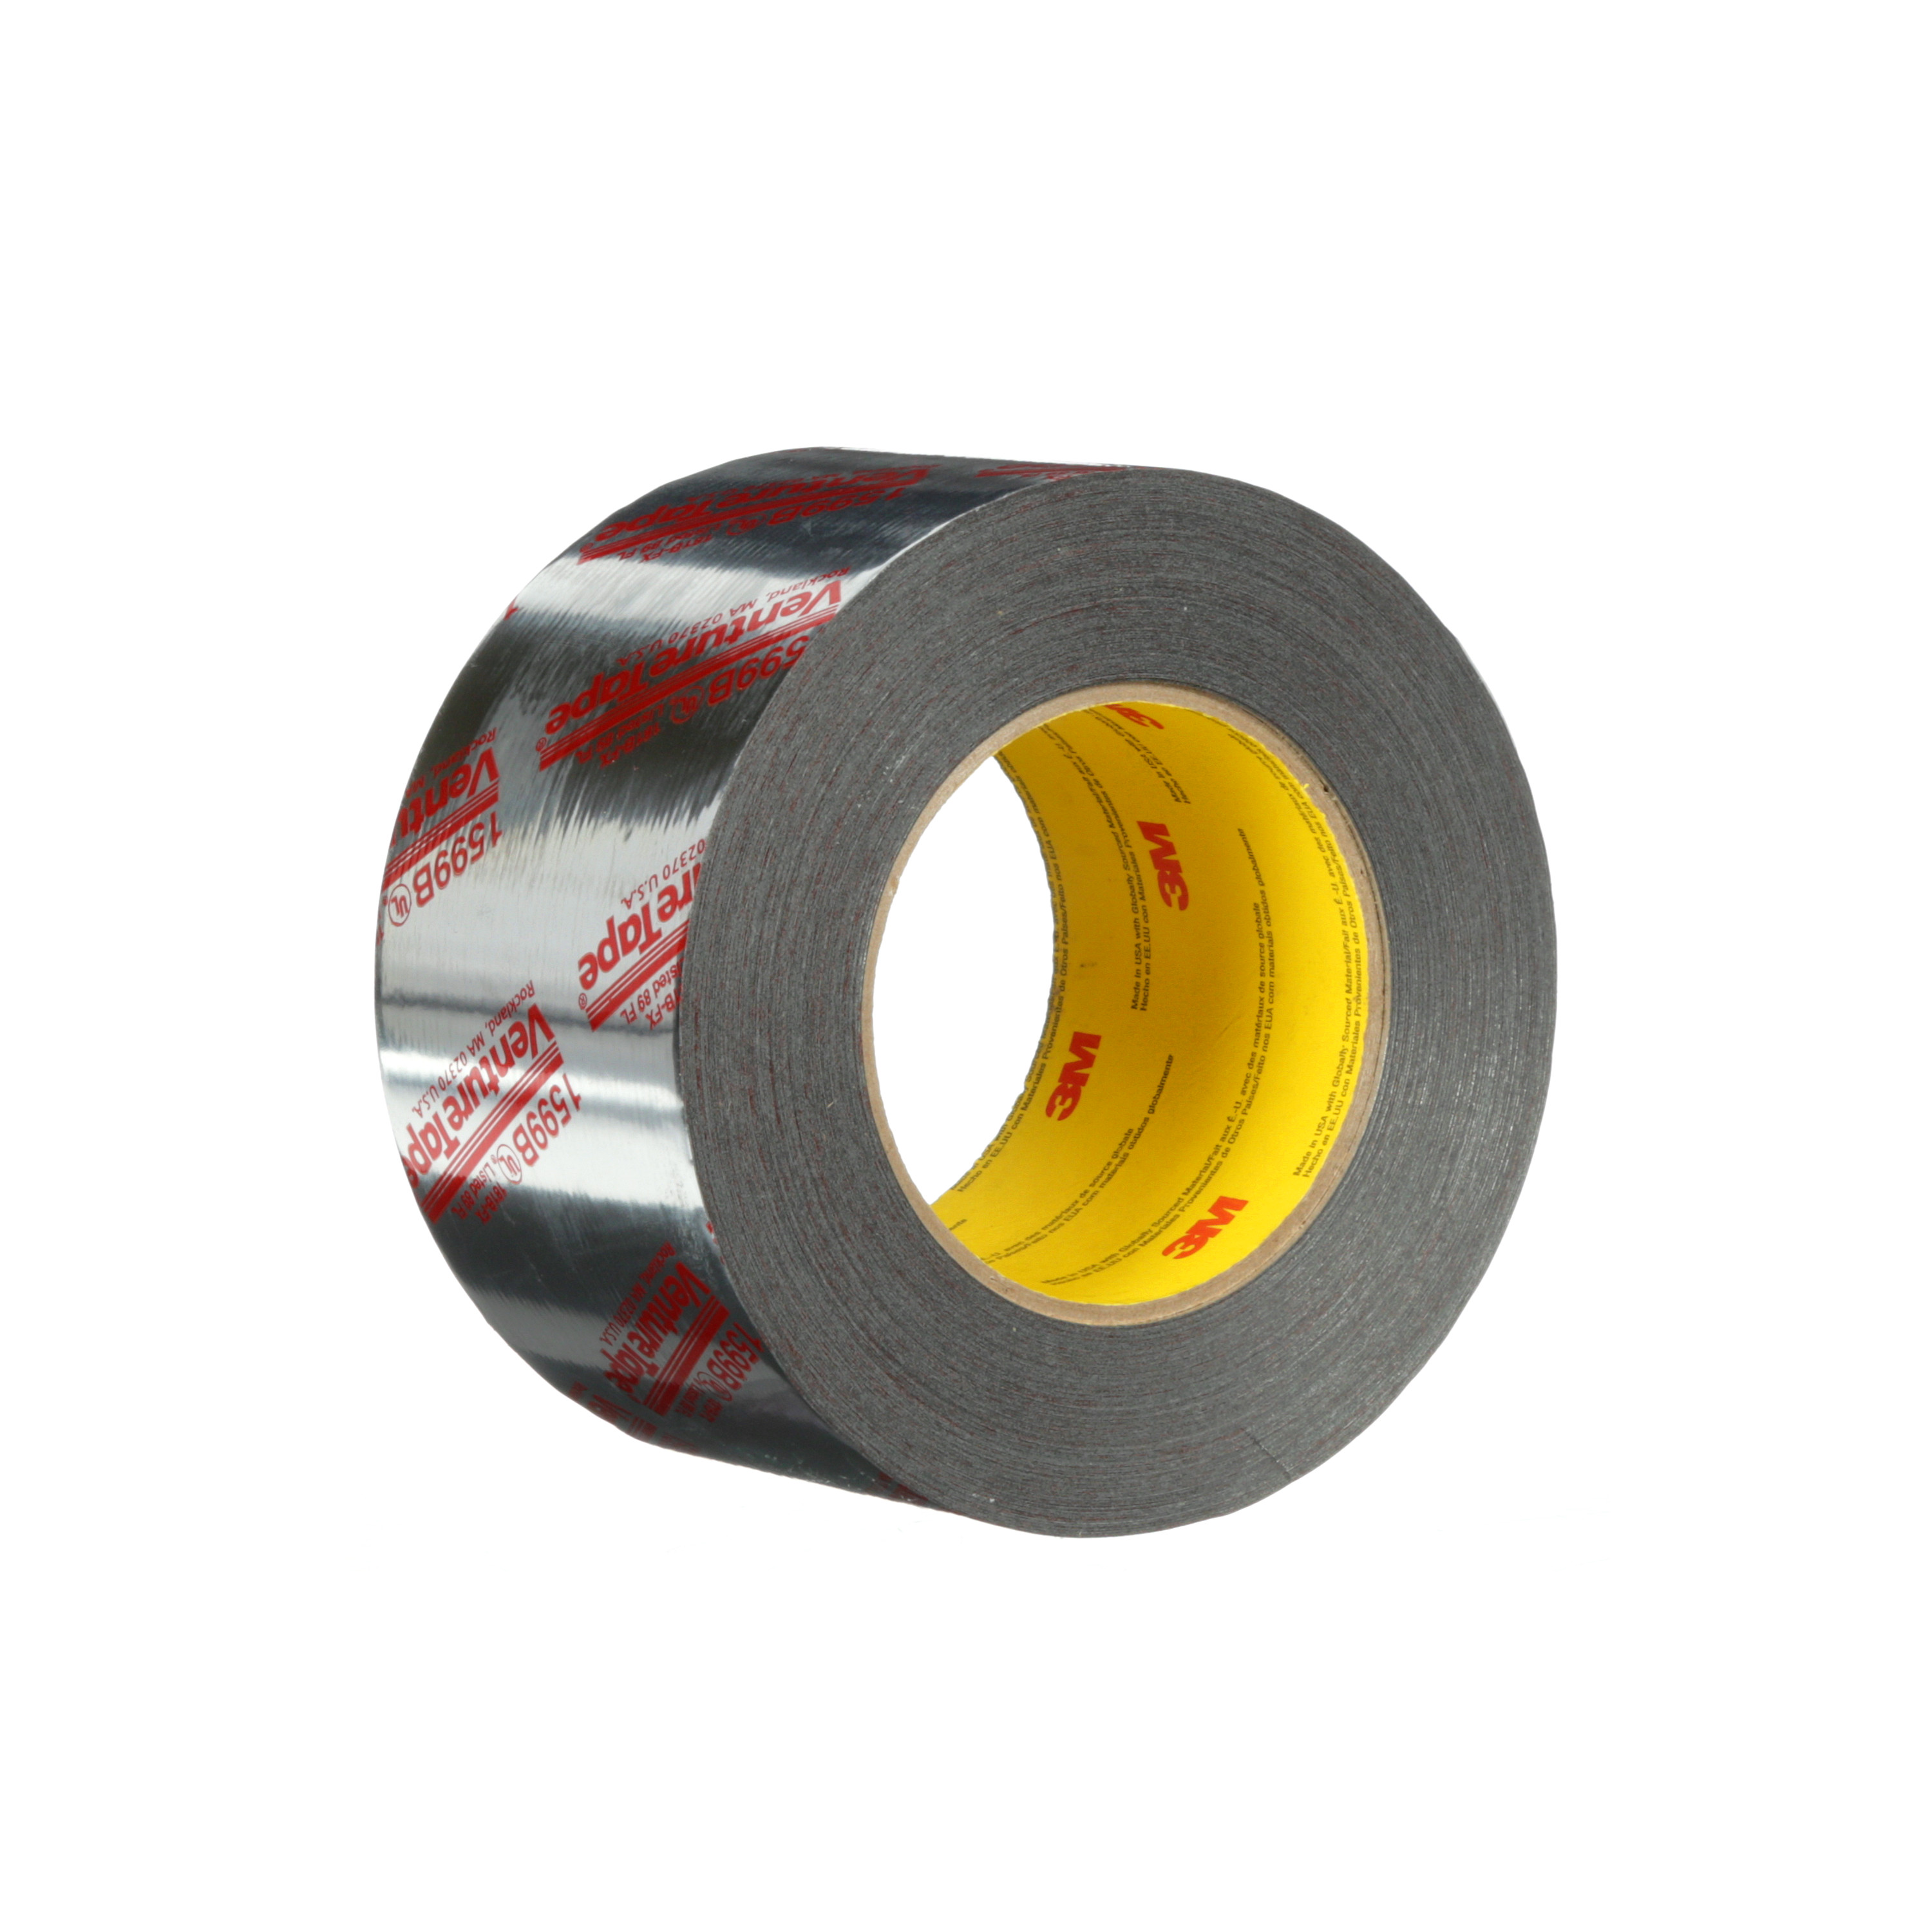 3M™ Venture Tape™ UL181B-FX Polypropylene Duct Tape 1599B, Silver, 72 mm
x 109.7 m, 3 mil, 16 rolls per case